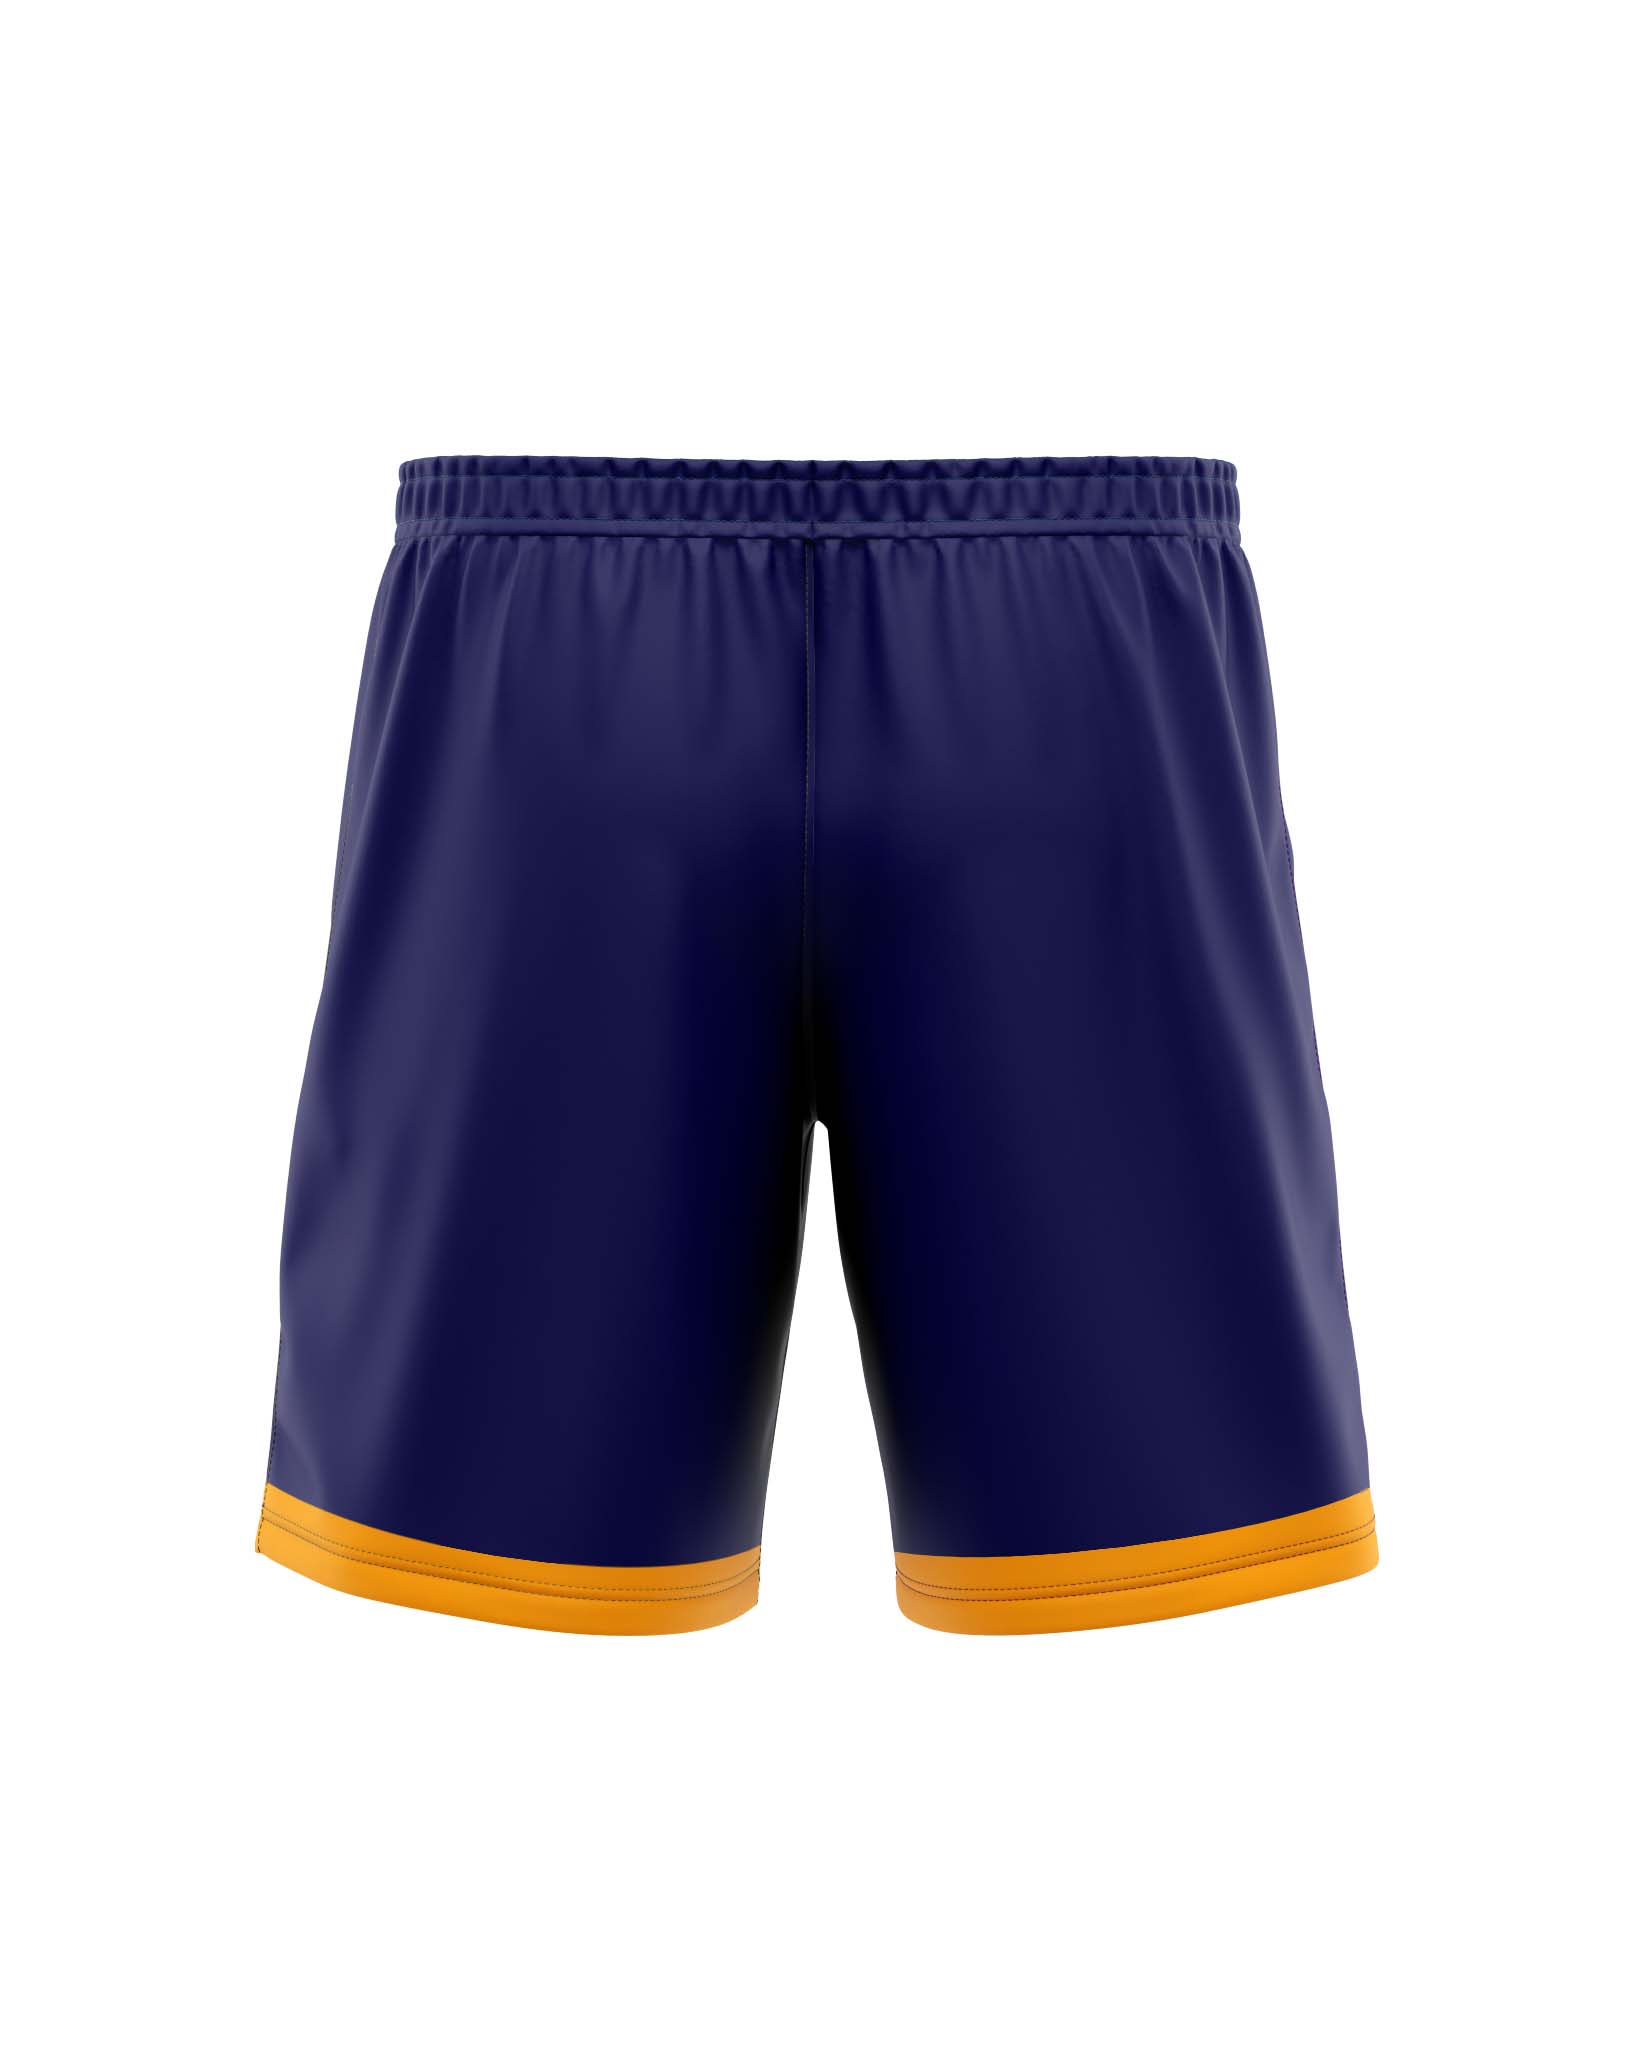 Scorchers Reversible Shorts - Mens